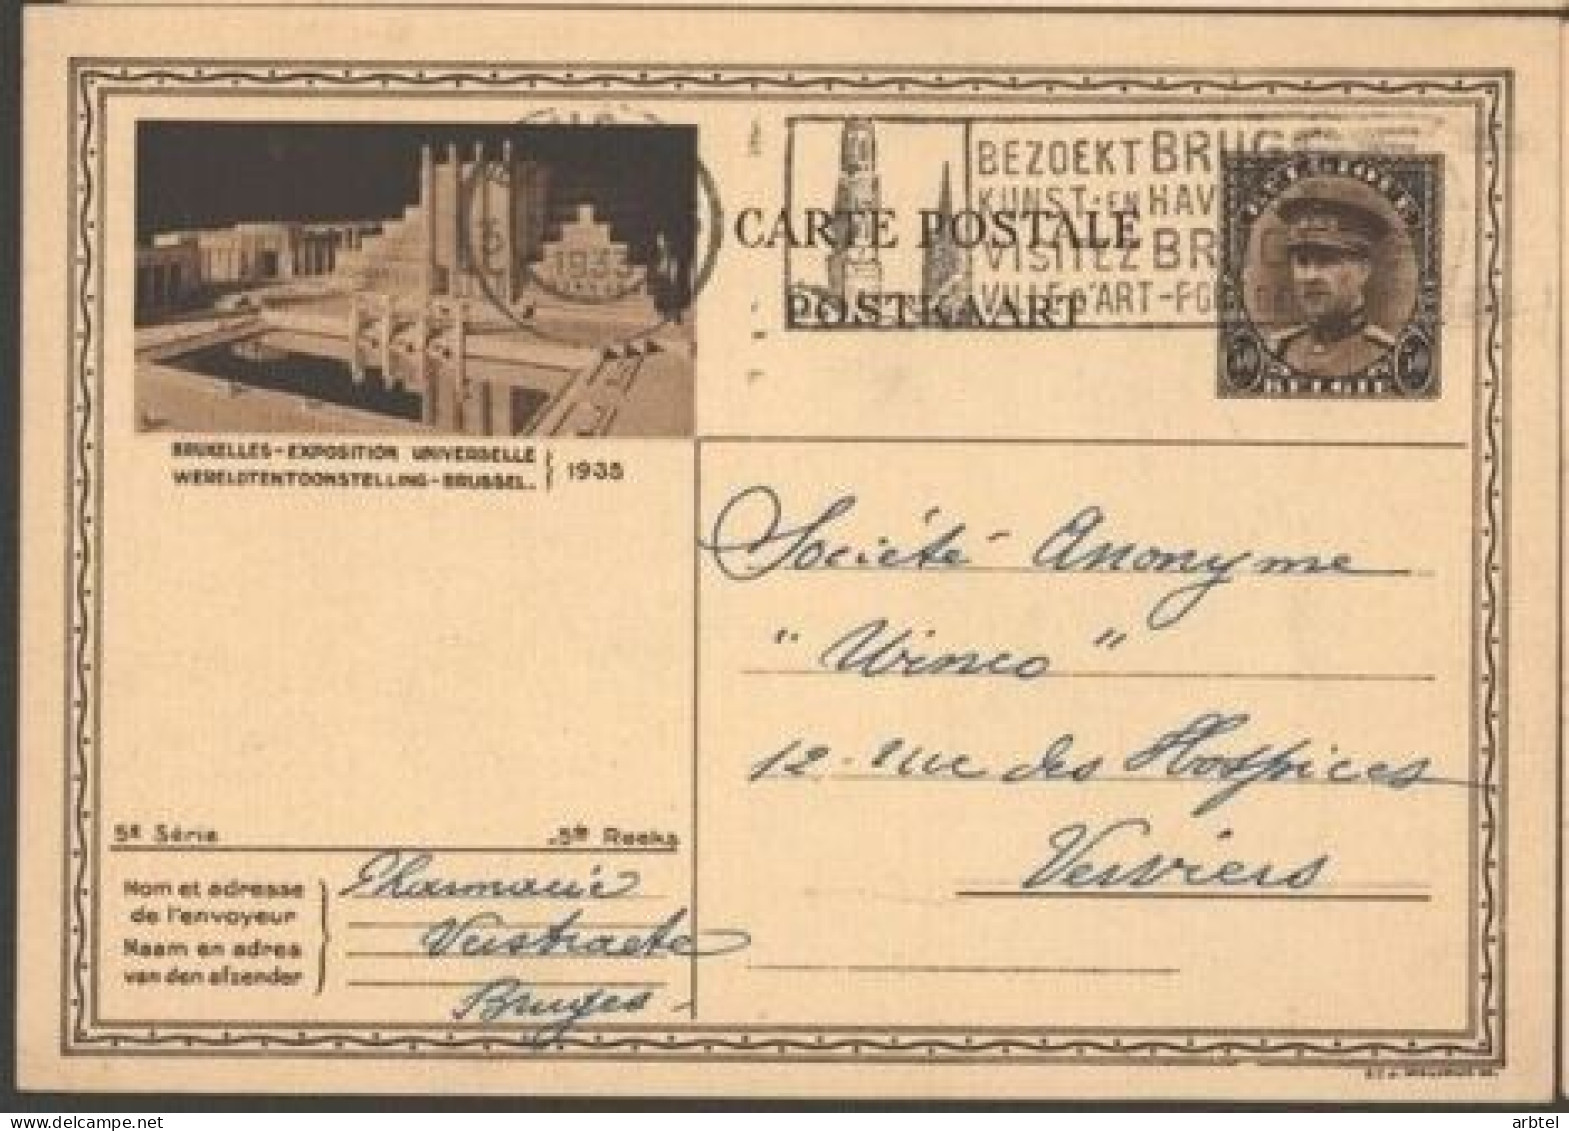 BELGICA ENTERO POSTAL EXPOSITION BRUXELLES 1935 MAT BRUGEE - 1935 – Bruselas (Bélgica)